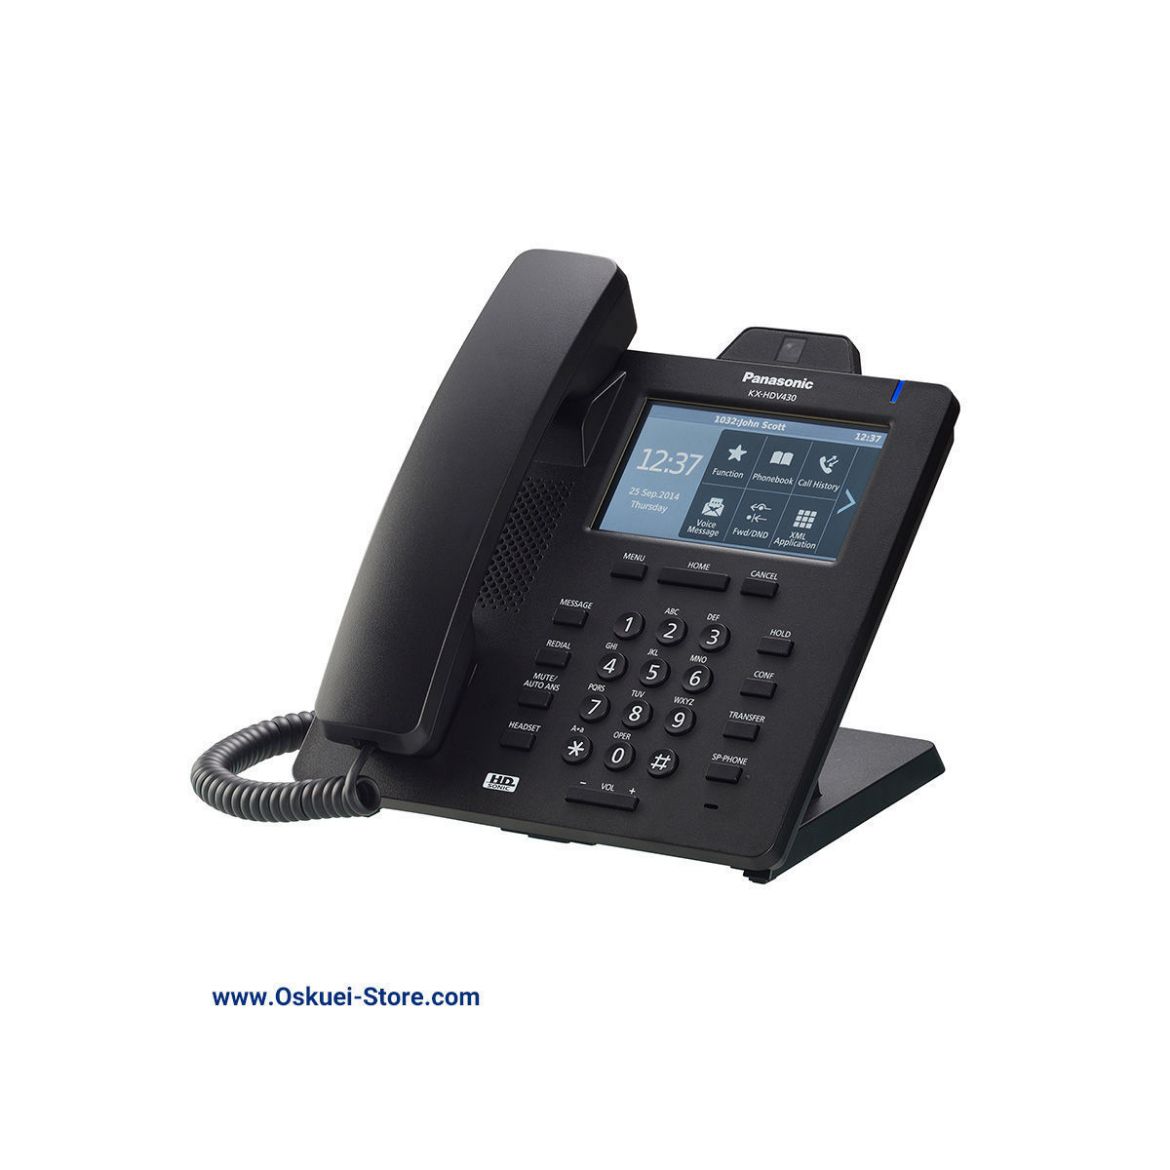 Panasonic KX-HDV430 VoIP SIP Telephone Black Right